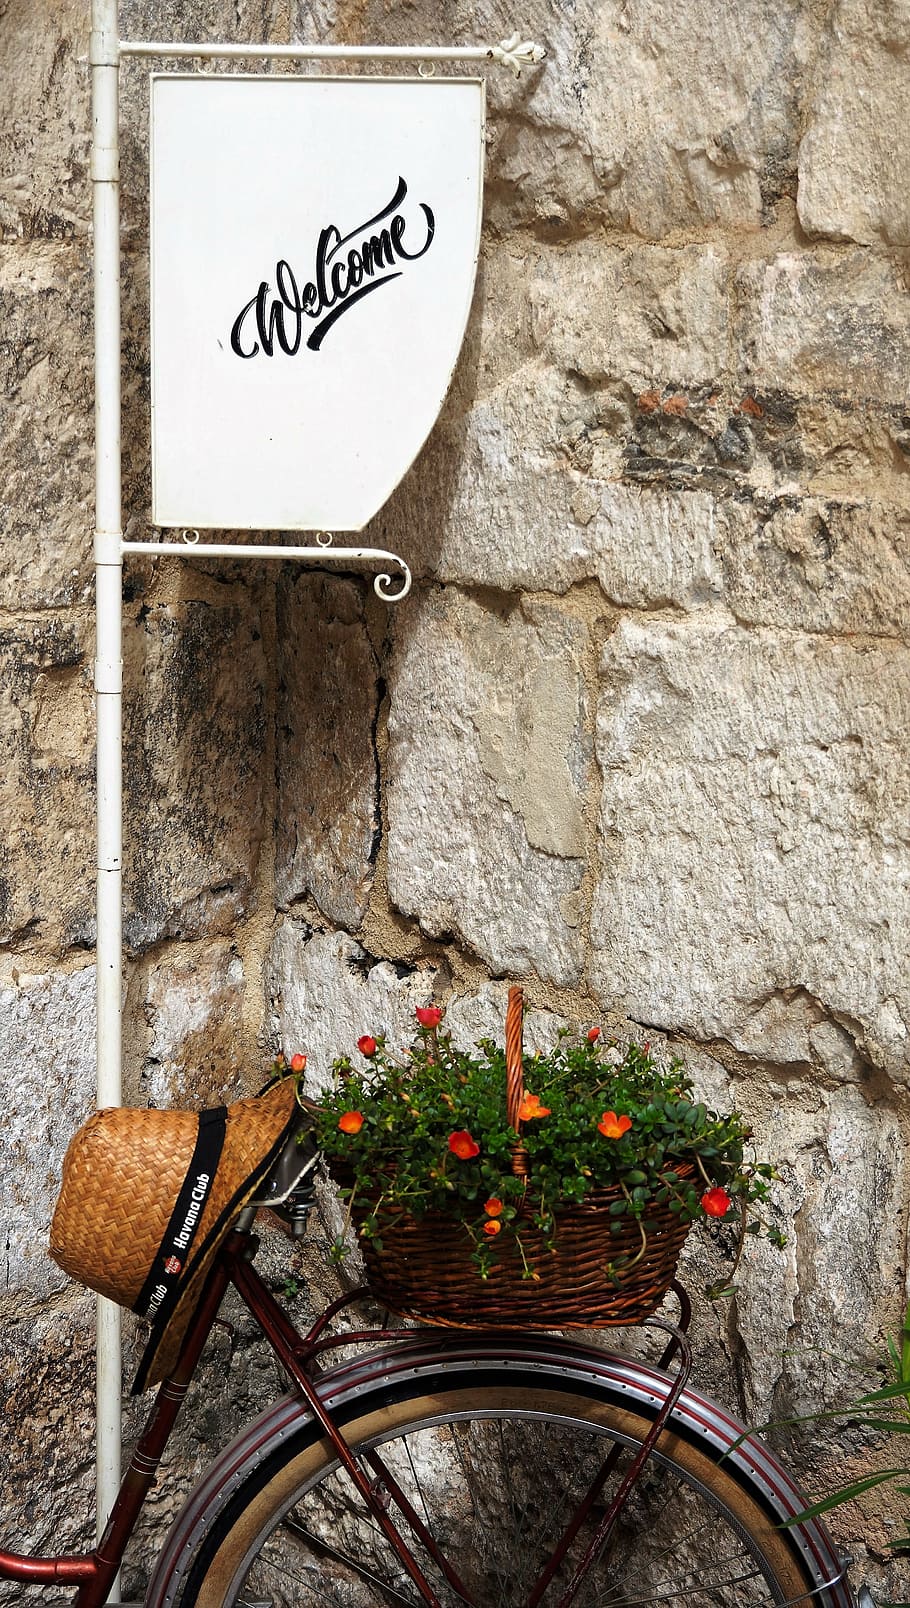 bicicleta, bienvenido, flores, sombrero, croacia, letrero, calle, función de construcción de muros, texto, nadie